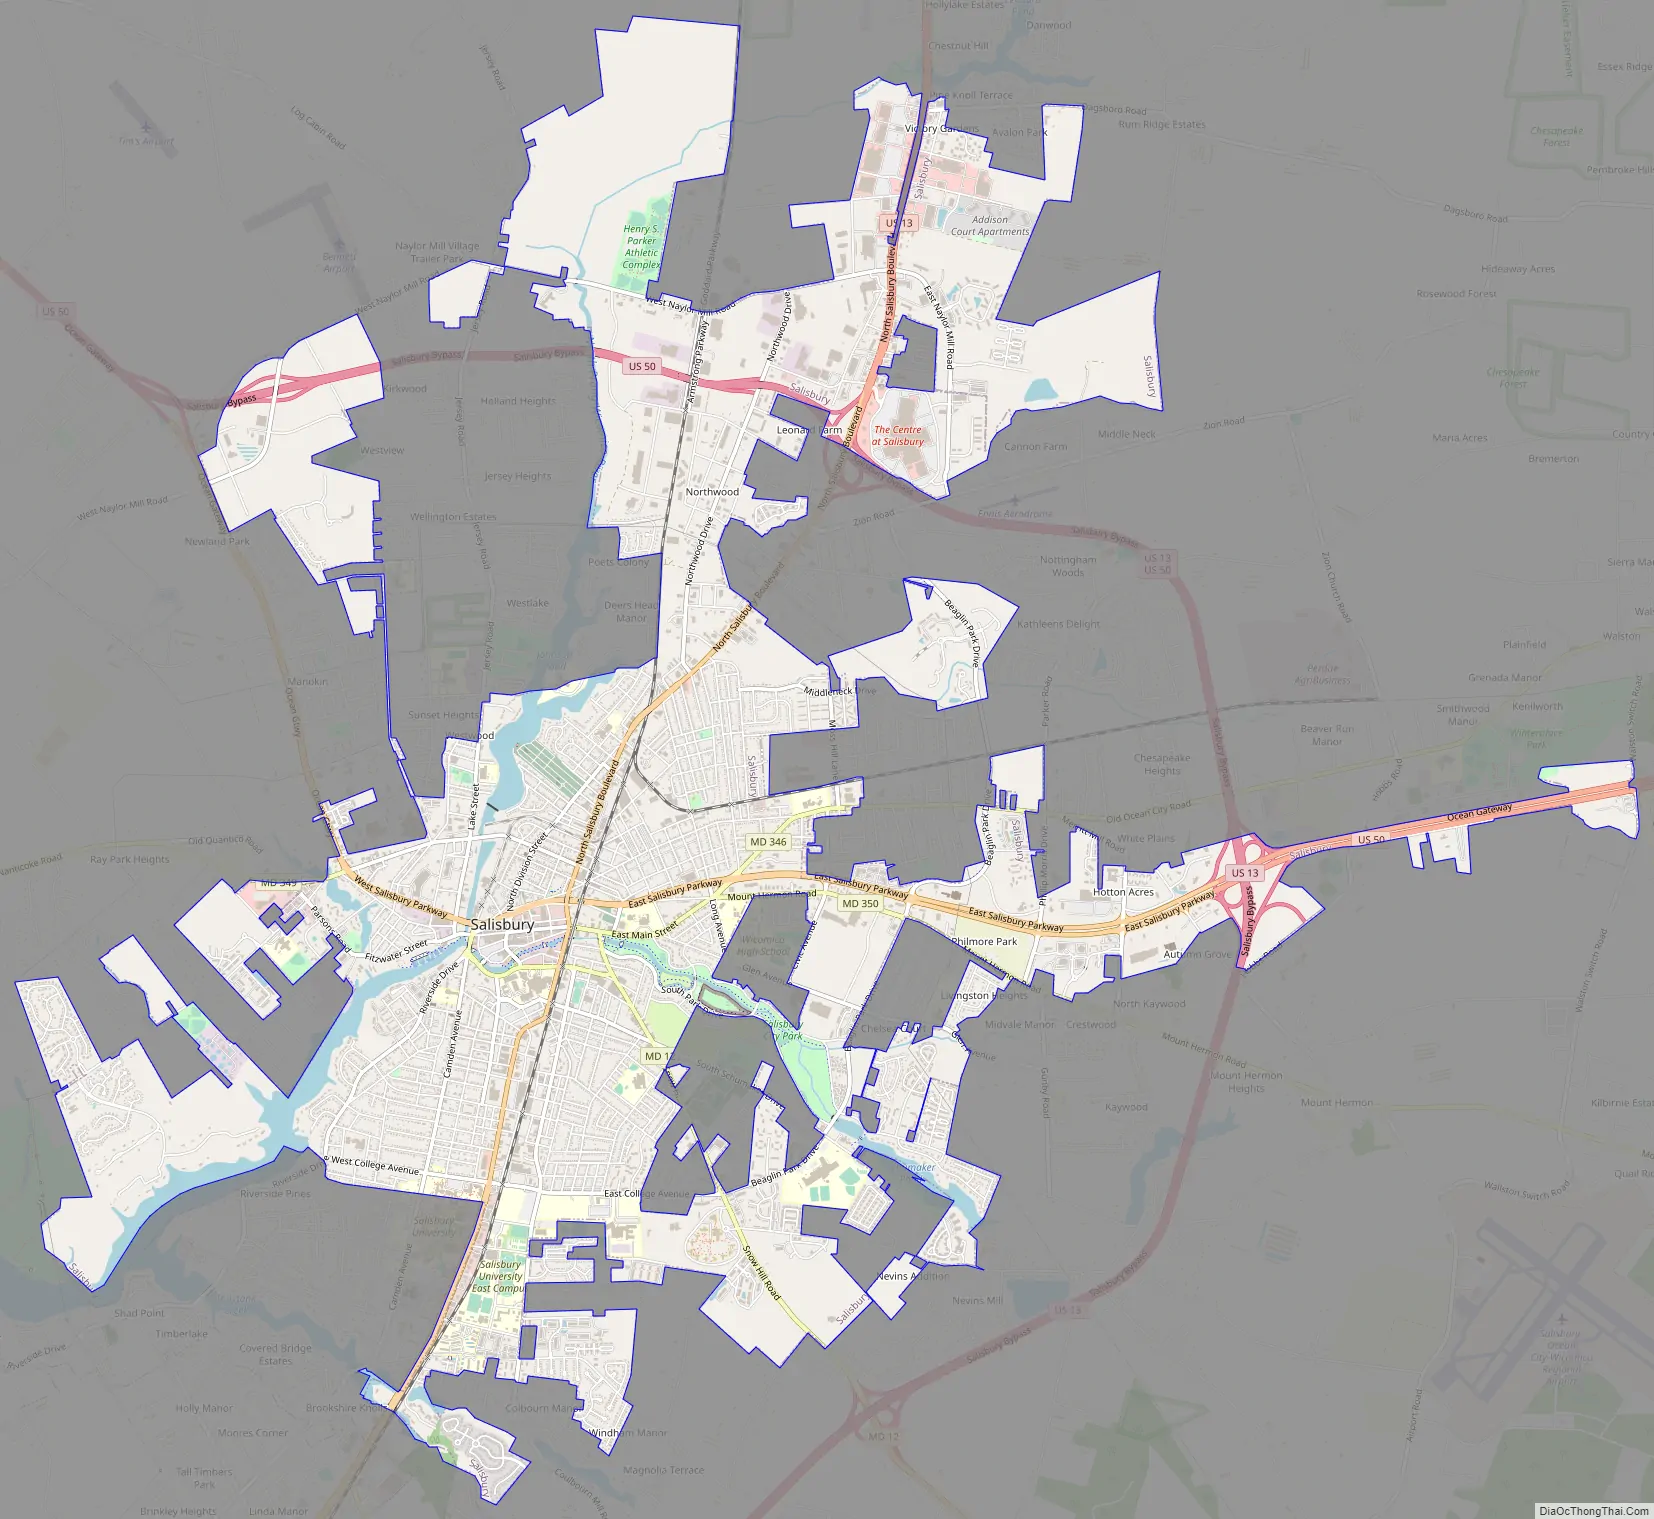 Map of Salisbury city, Maryland